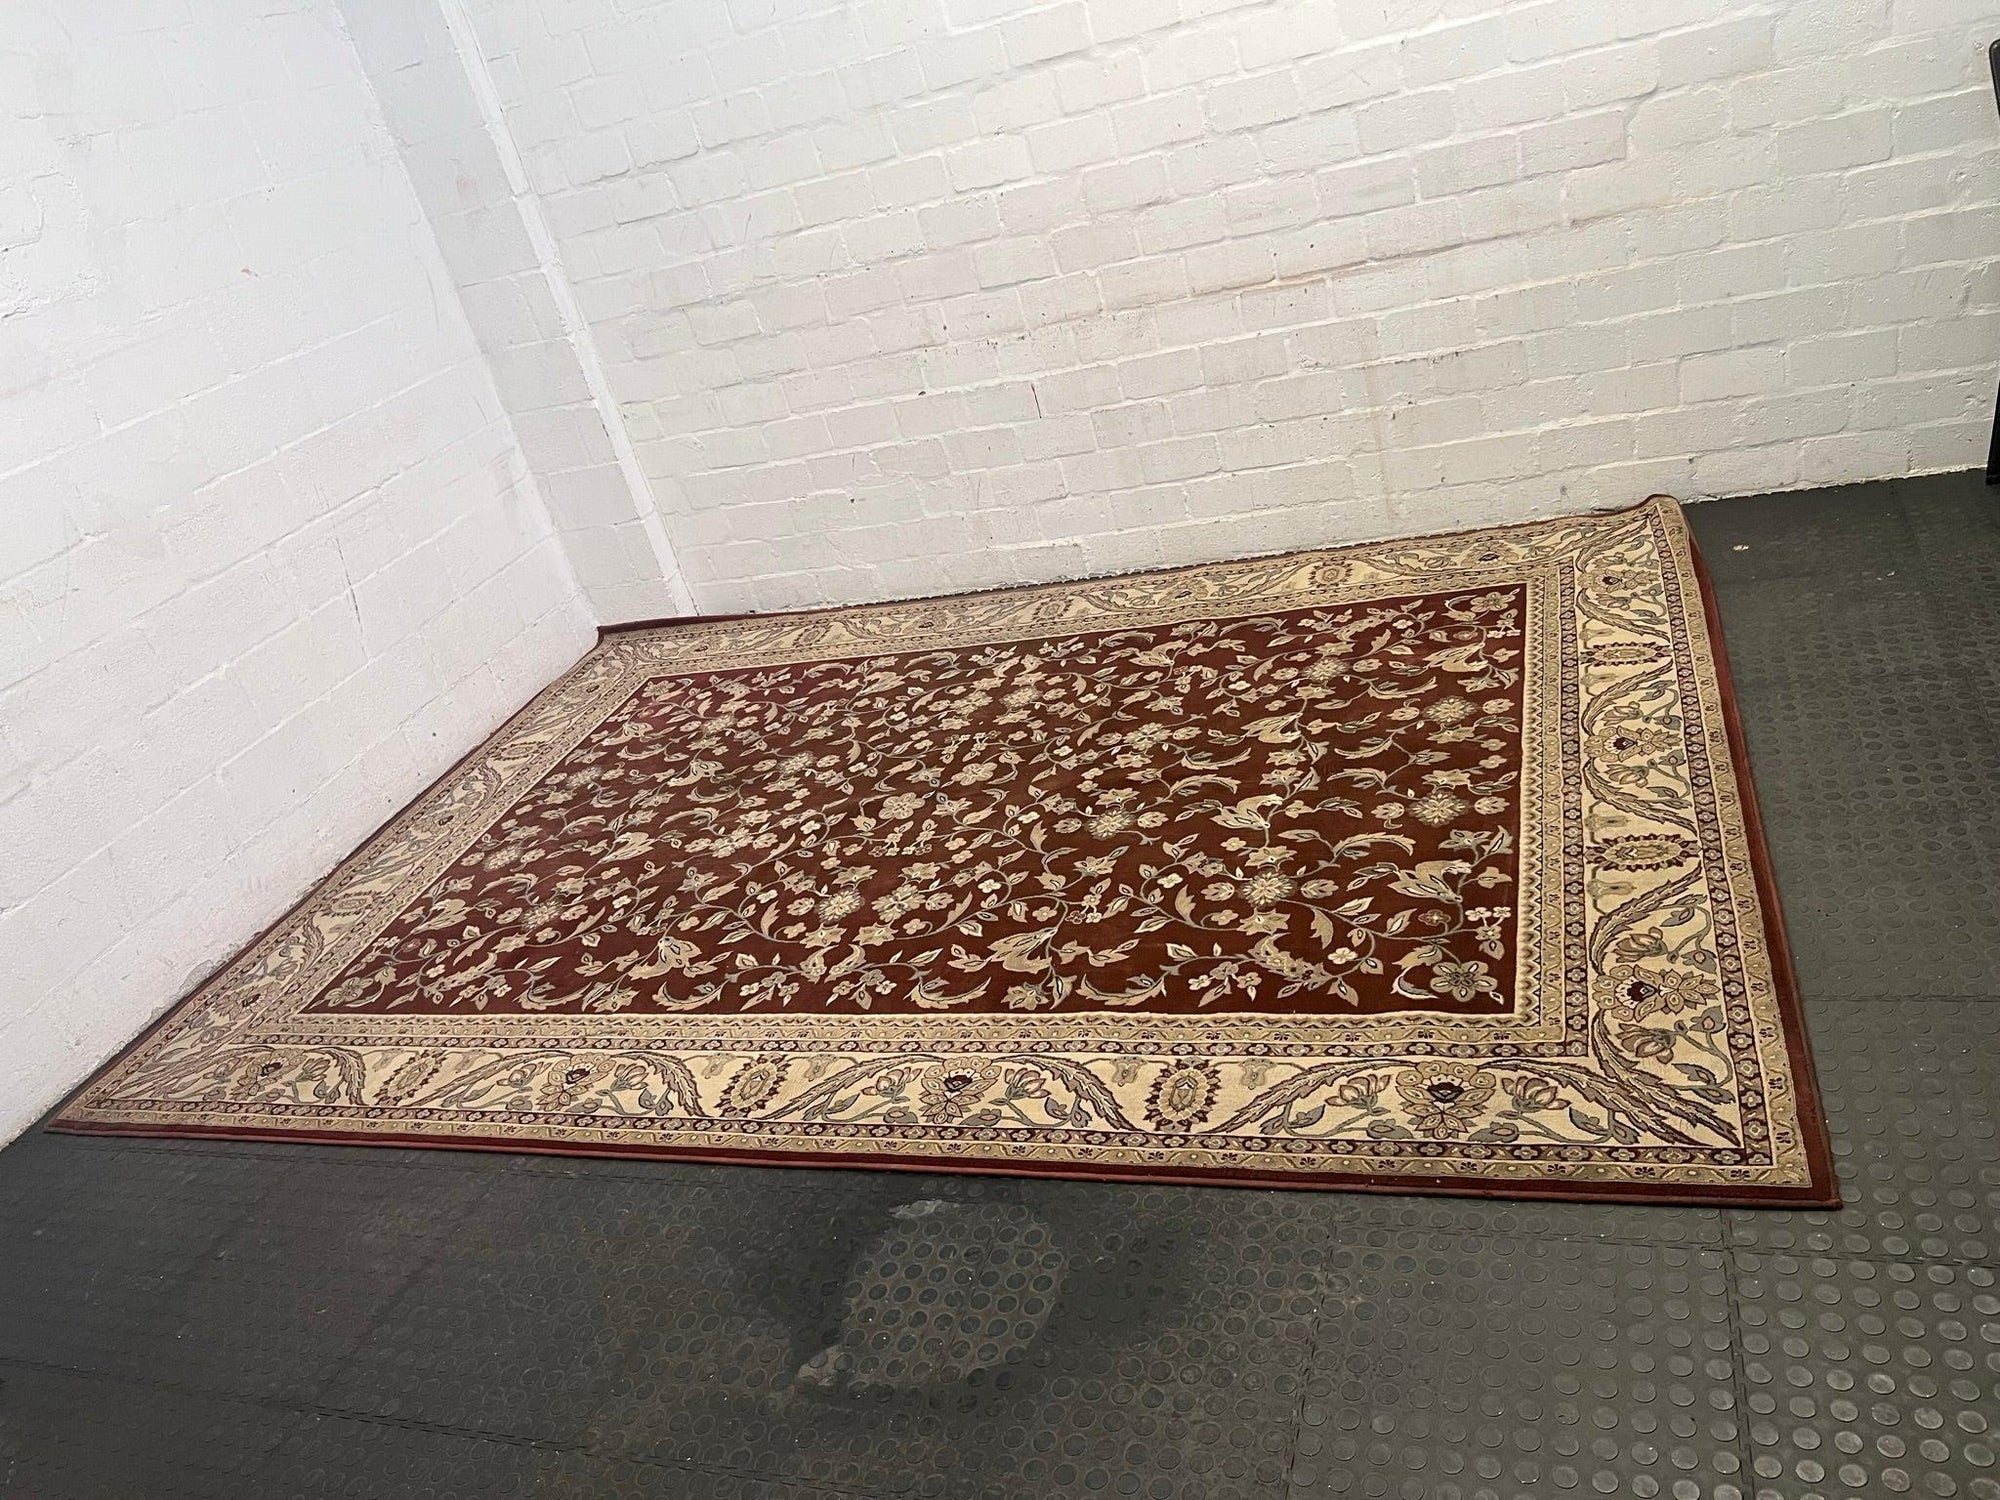 Brown and Beige Patterned Carpet (237cm x 331cm)